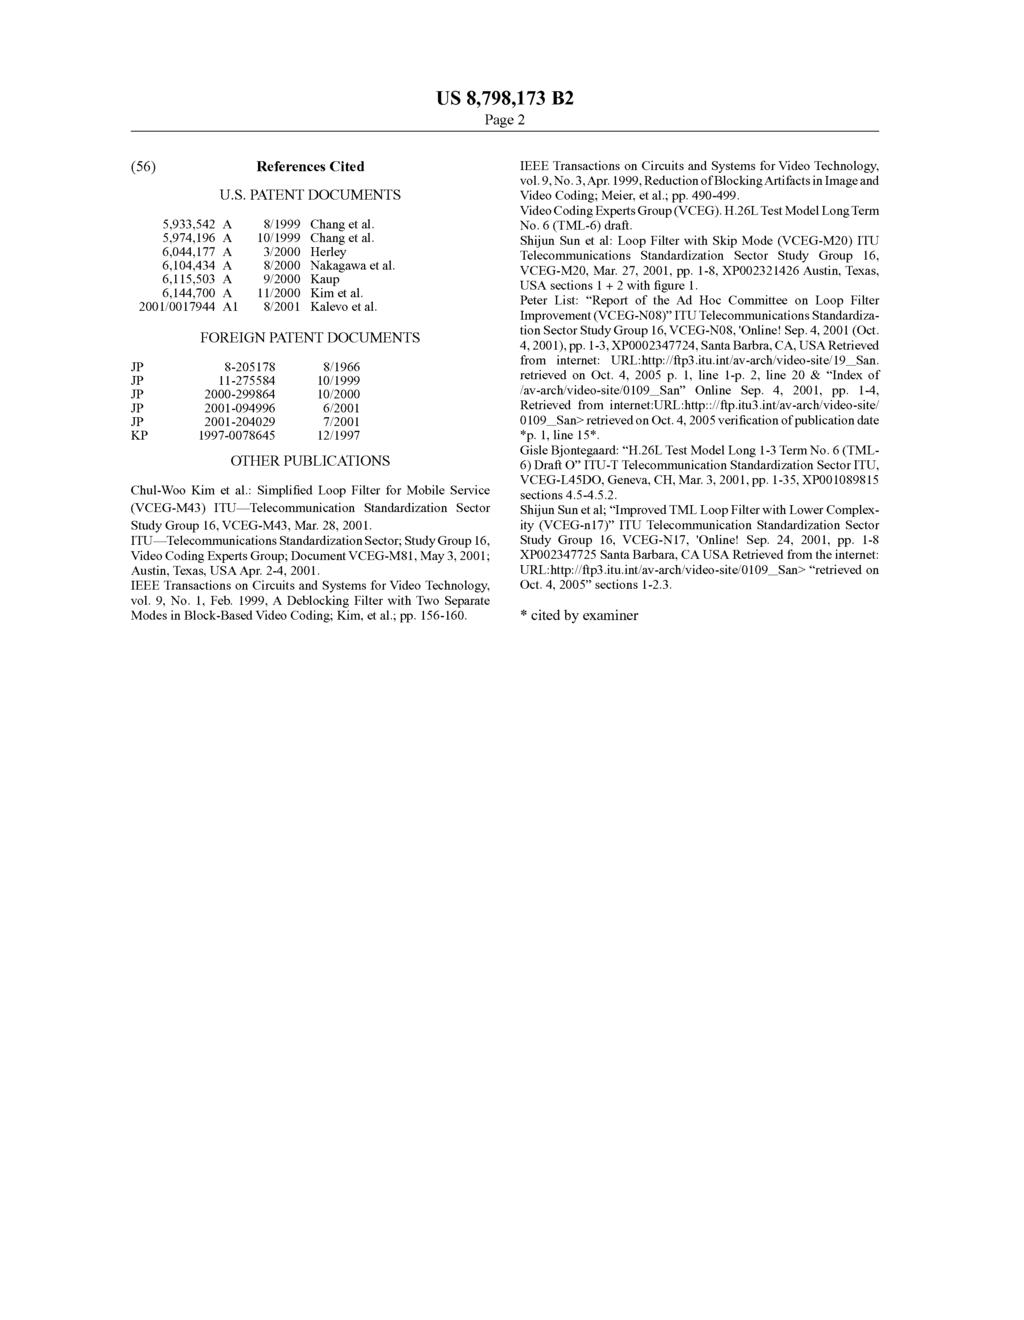 Page 2 (56) References Cited U.S. PATENT DOCUMENTS 5,933,542 A 8/1999 Chang et al. 5,974, 196 A 10/1999 Chang et al. 6,044,177 A 3/2000 Herley 6,104,434 A 8/2000 Nakagawa et al.